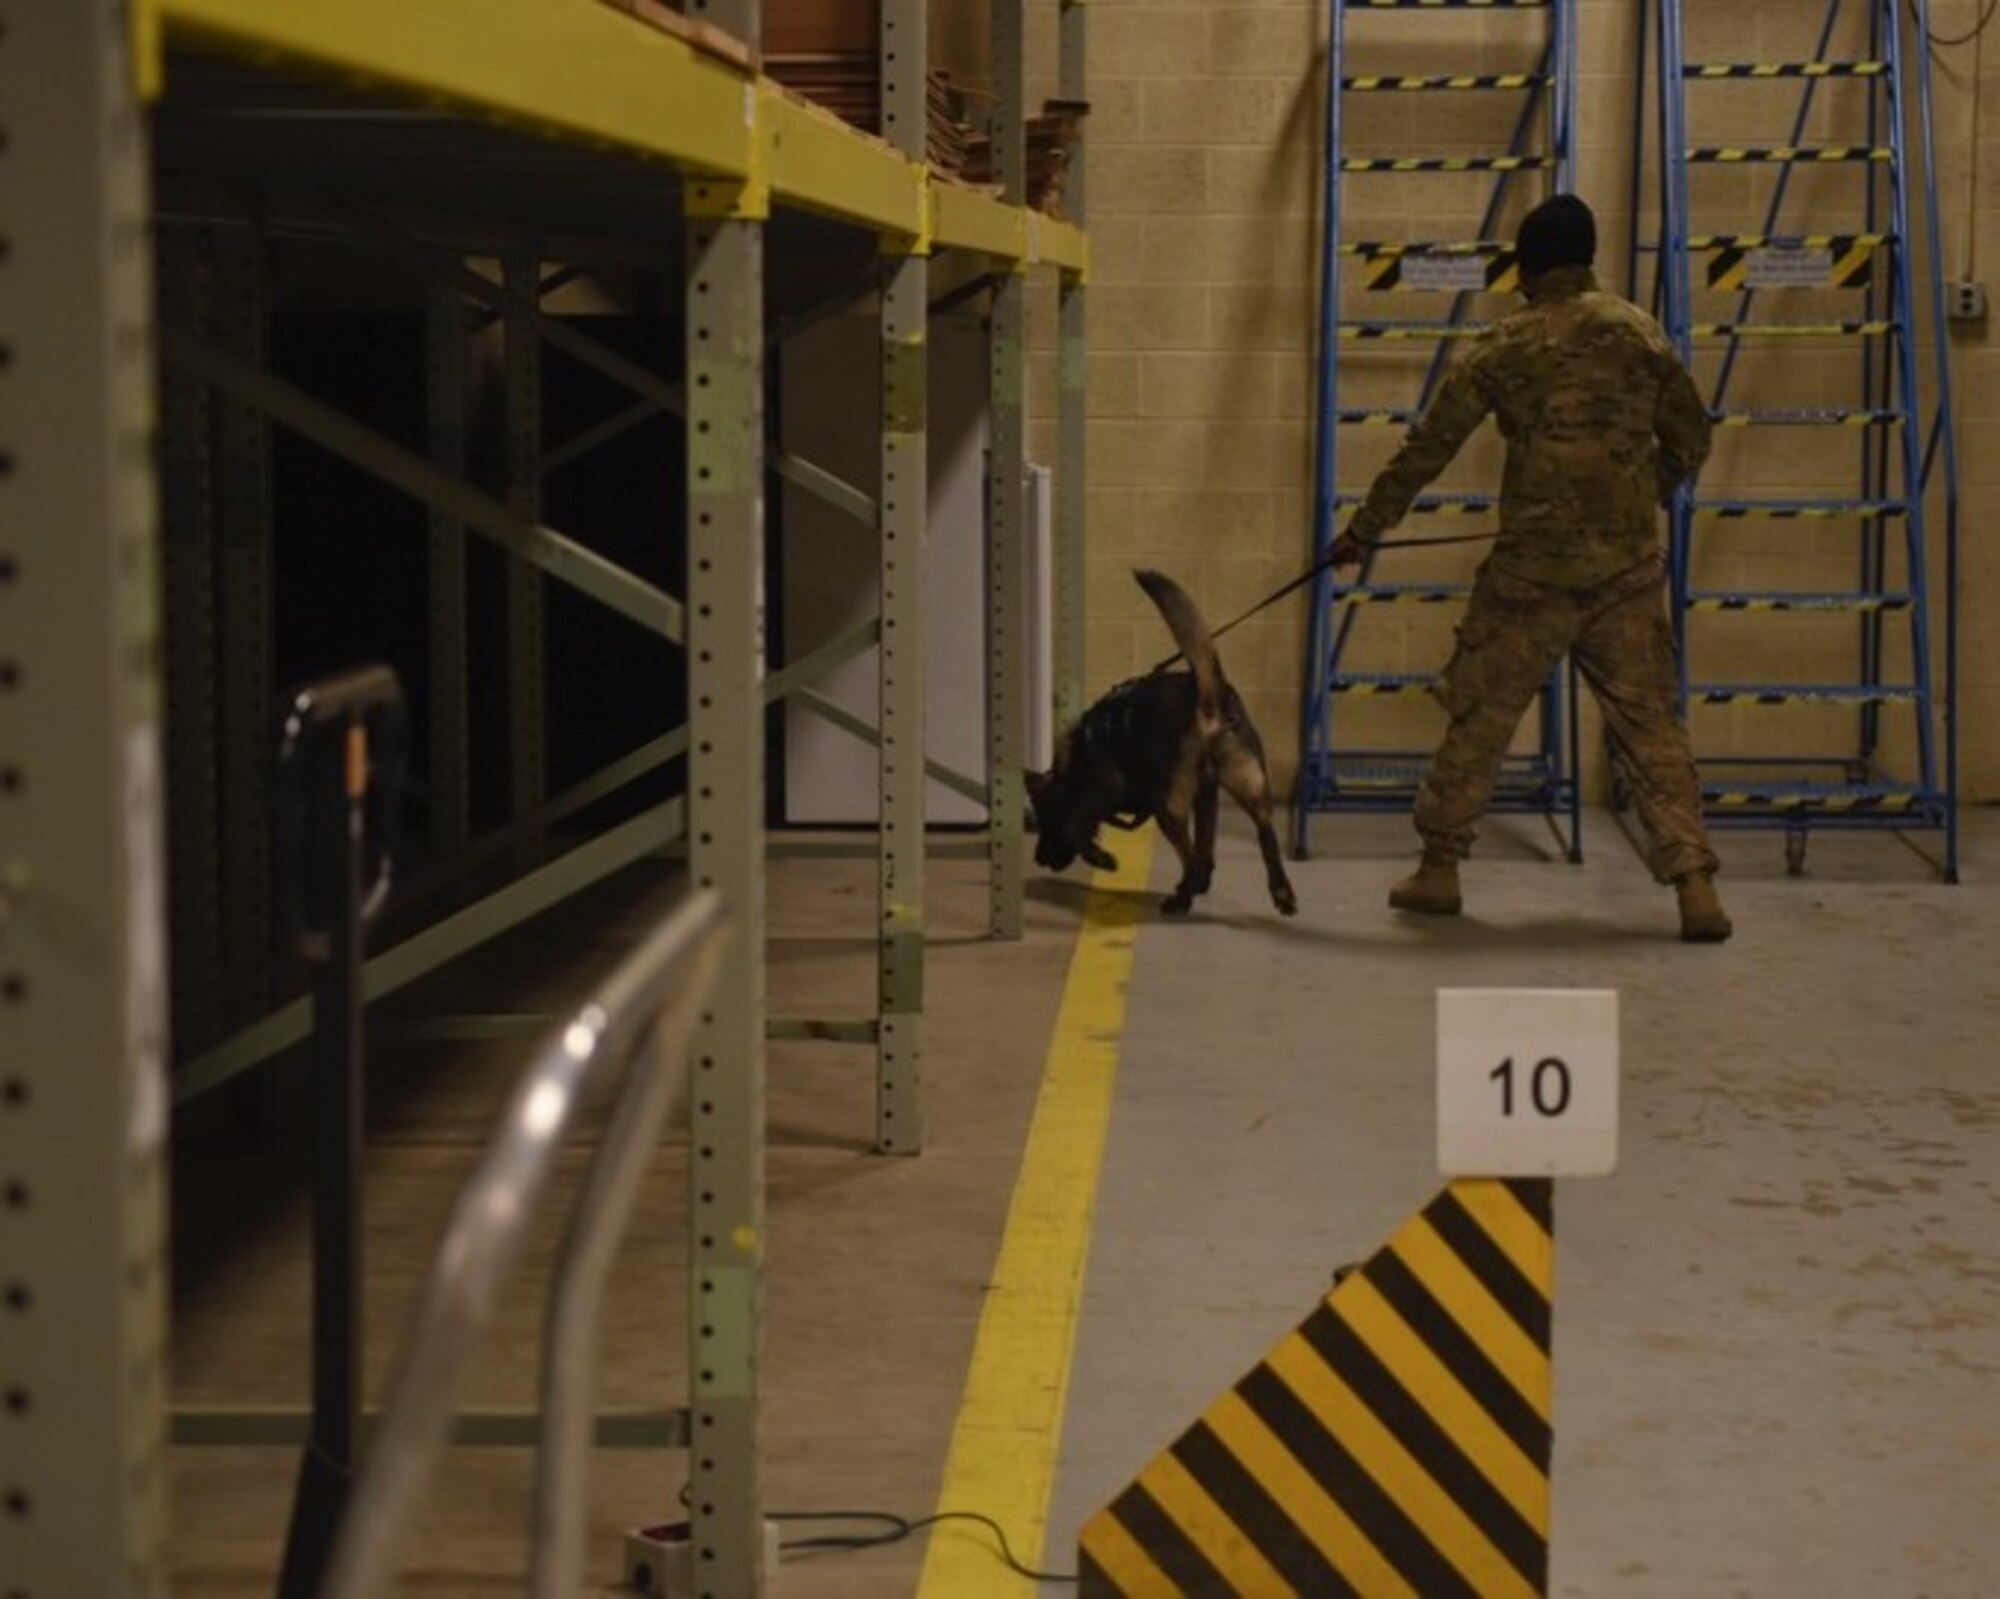 An Airmen follows his dog as they walk through a warehouse searching for explosives.